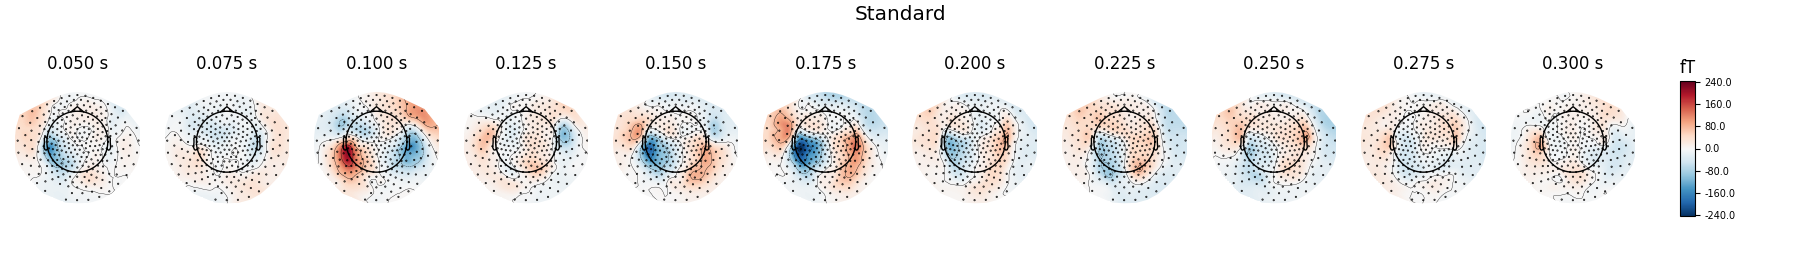 Standard, 0.050 s, 0.075 s, 0.100 s, 0.125 s, 0.150 s, 0.175 s, 0.200 s, 0.225 s, 0.250 s, 0.275 s, 0.300 s, fT